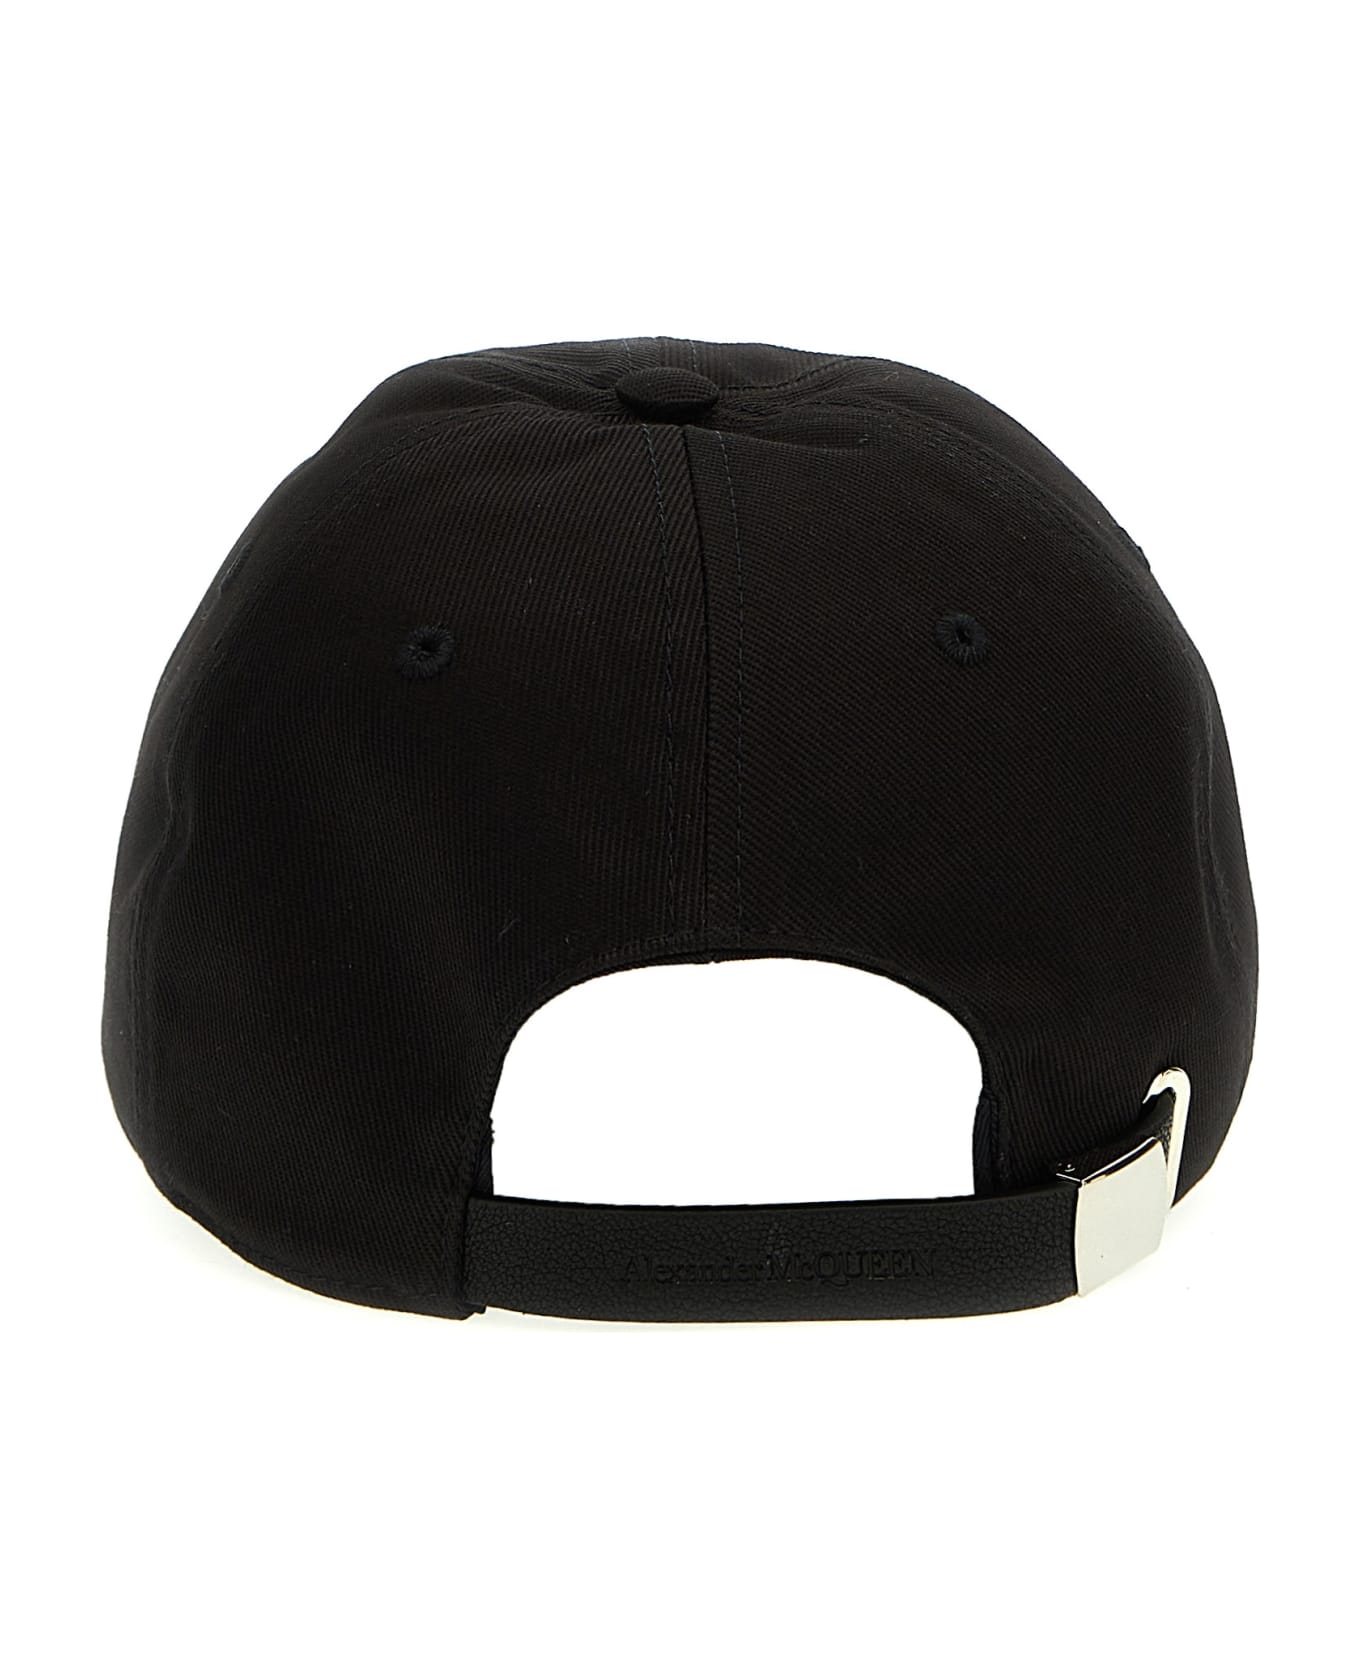 Alexander McQueen Baseball Hat - Black Khaki